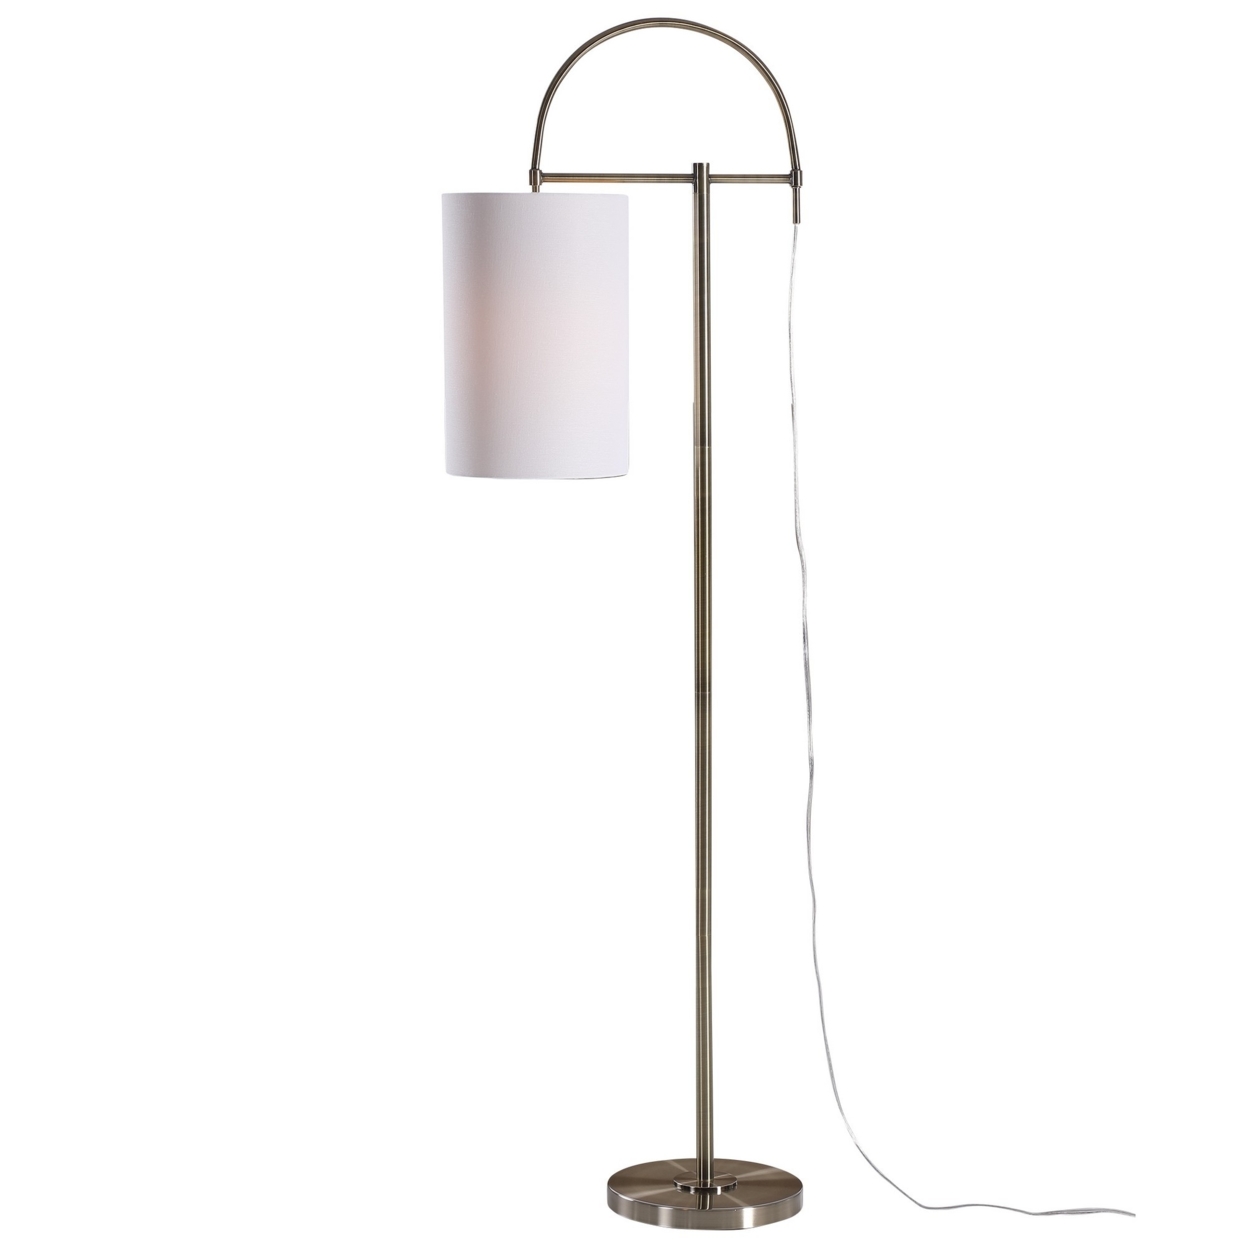 Stalk Design Metal Floor Lamp With Open Semi Circle Accent, Silver- Saltoro Sherpi